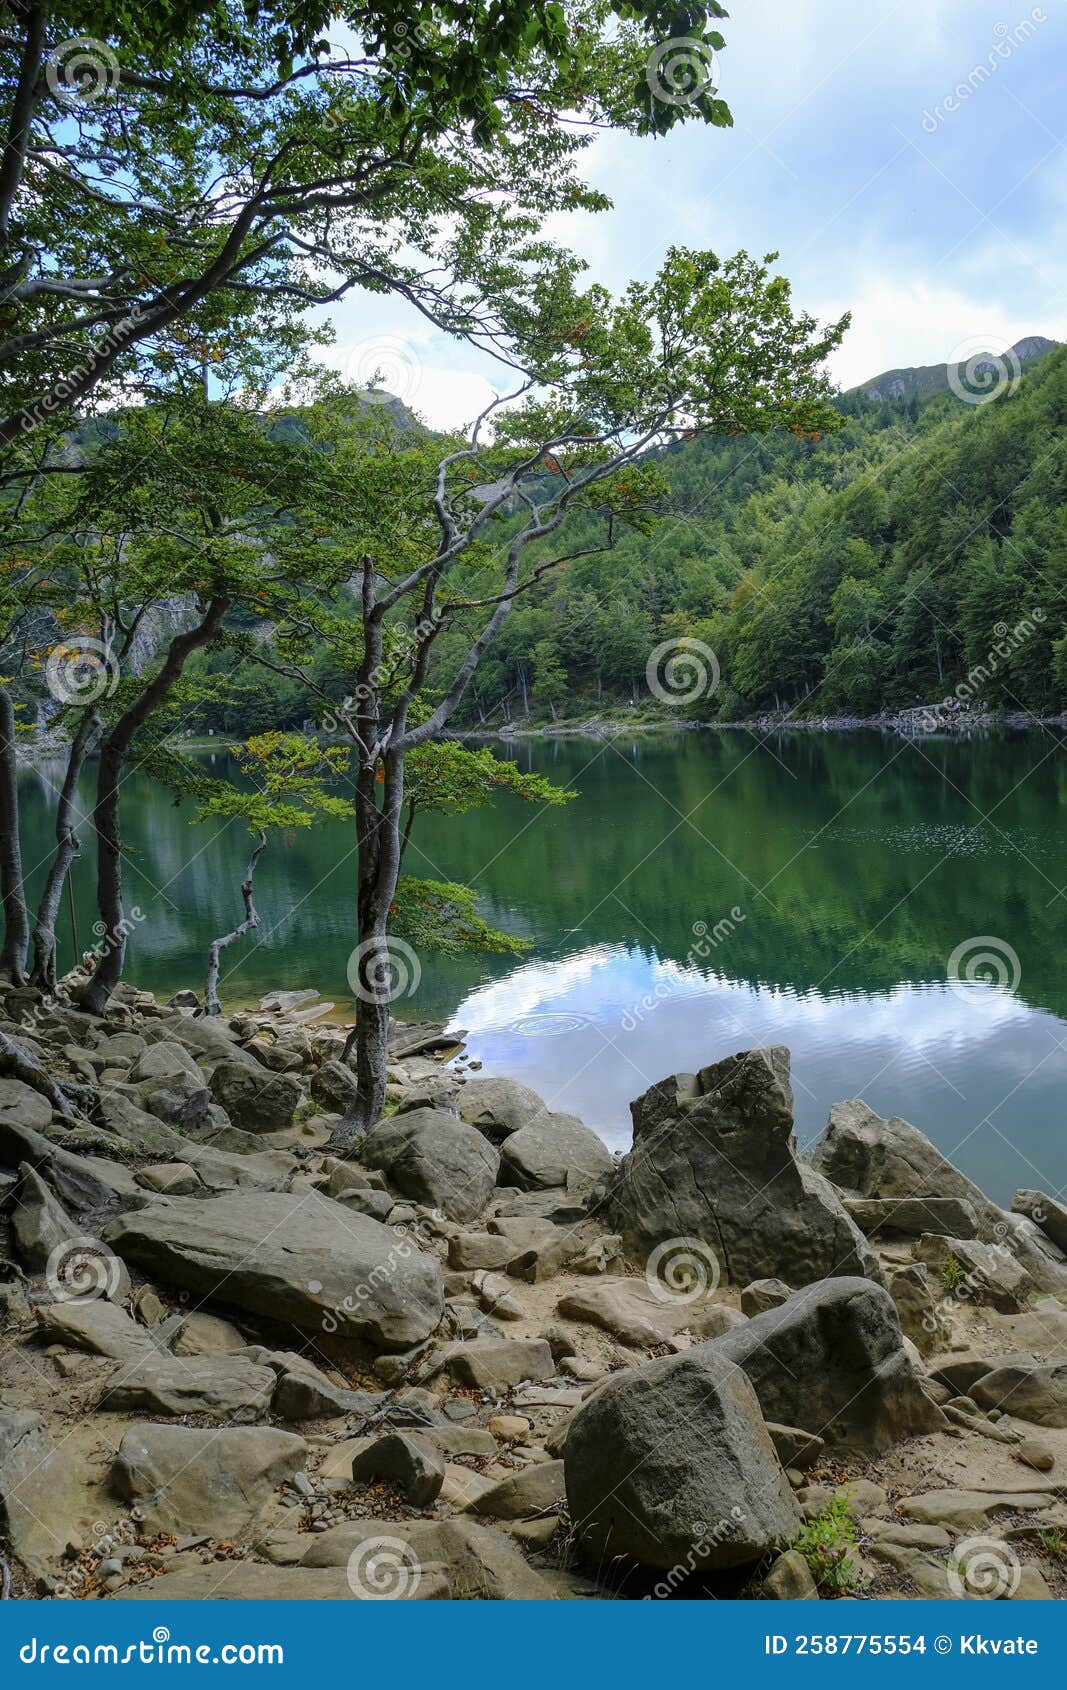 lake santo, lago santo nature reflects on the surface. appennino tosco-emiliano. lagdei, emilia-romagna